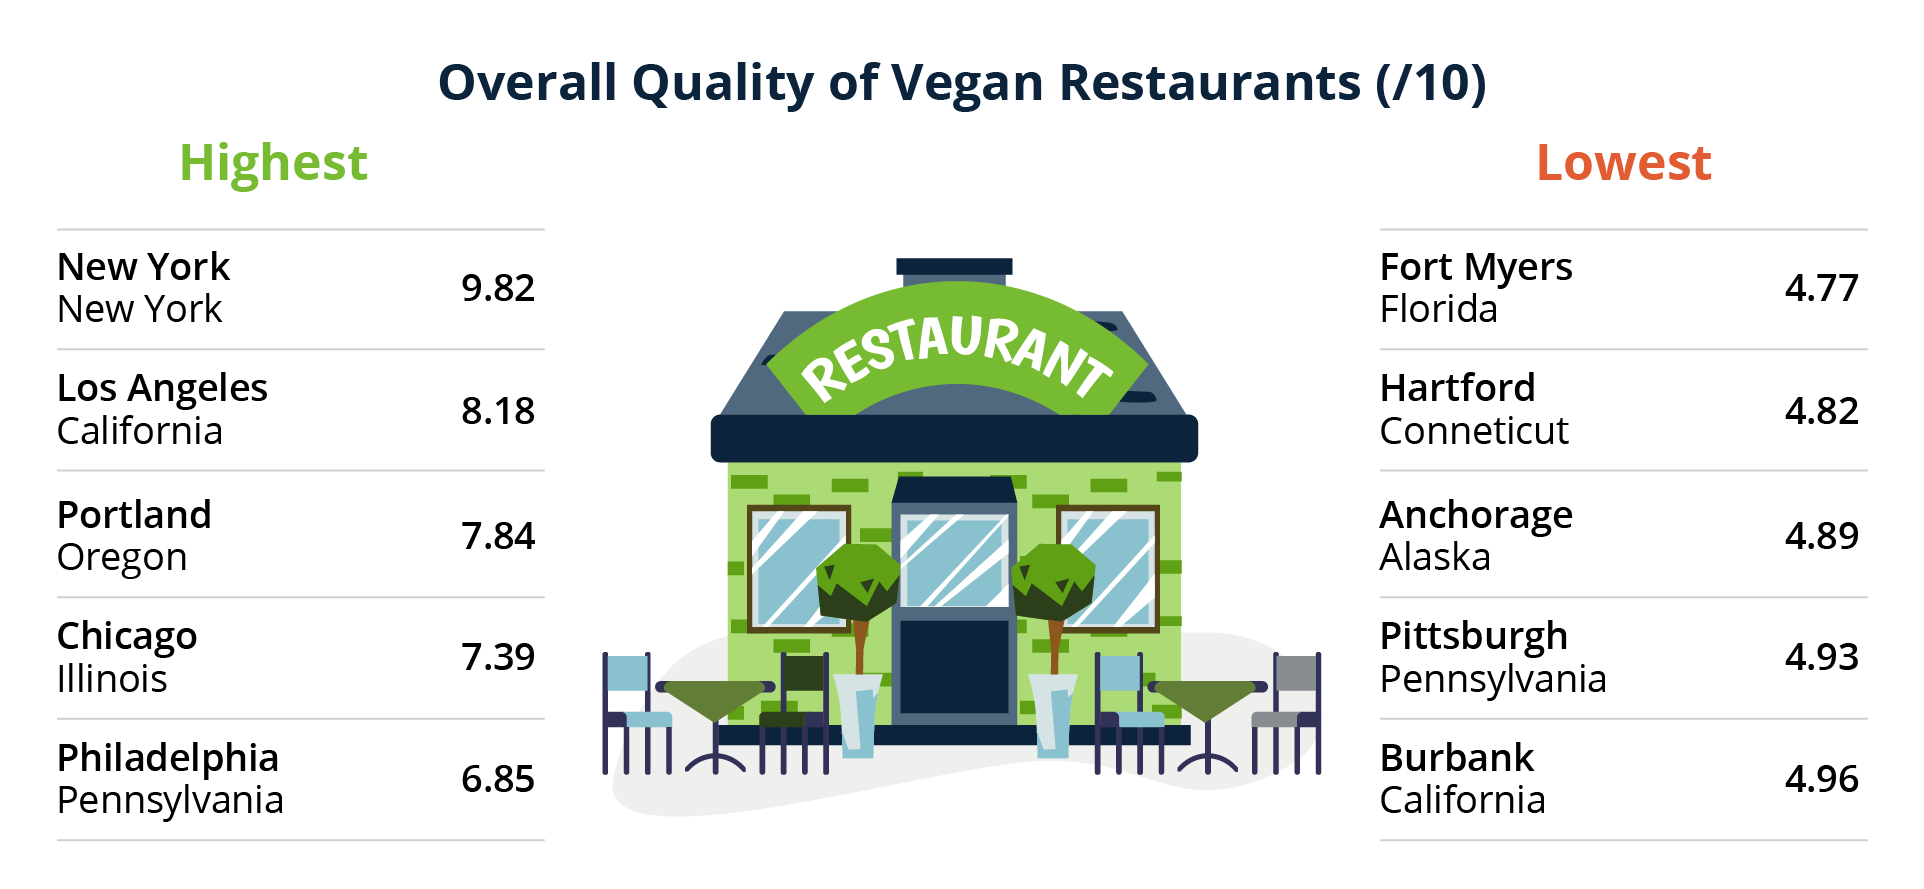 Overall Quality of Vegan Restaurants